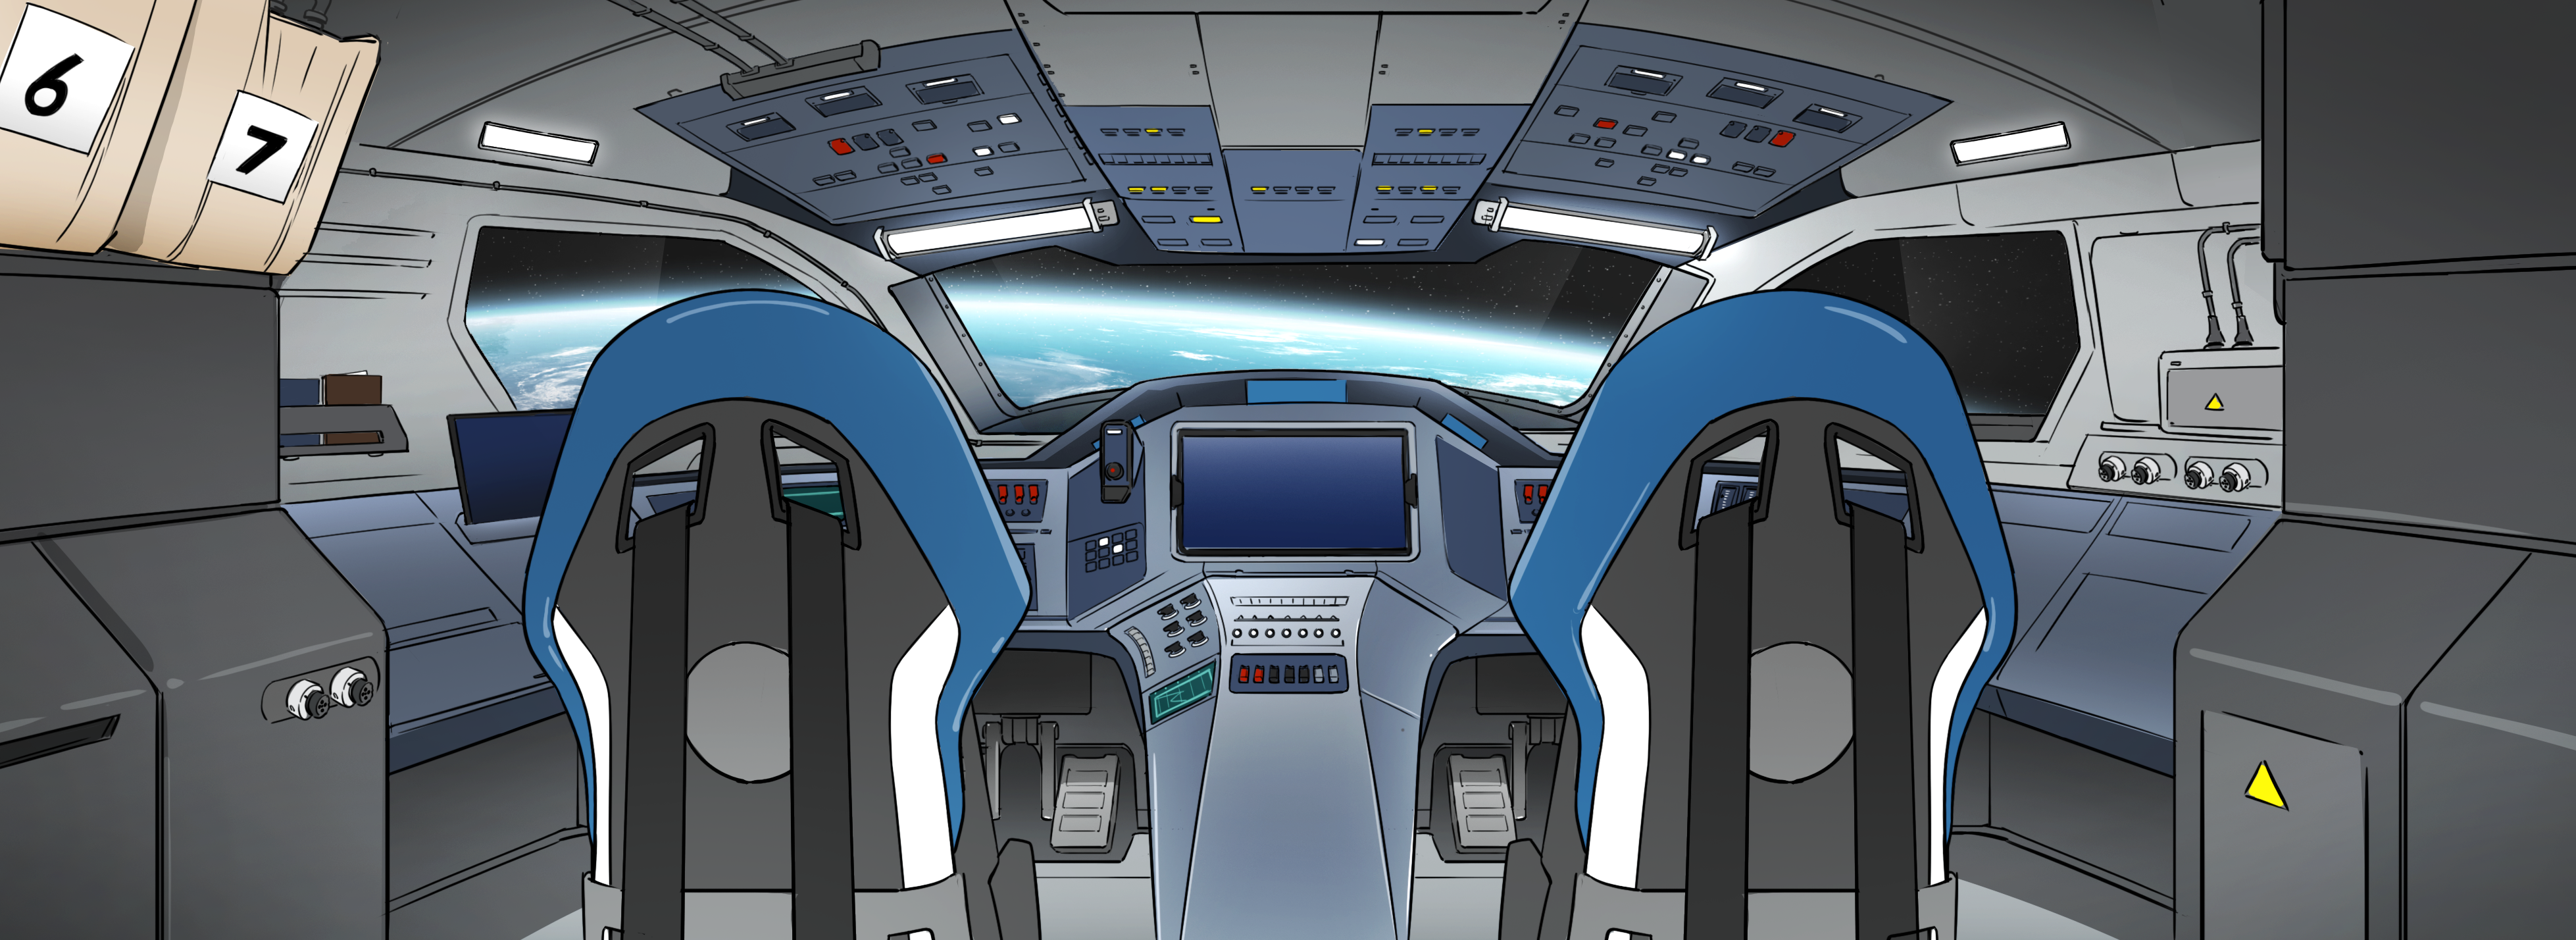 andrek_ship_interior_cockpit_chairs